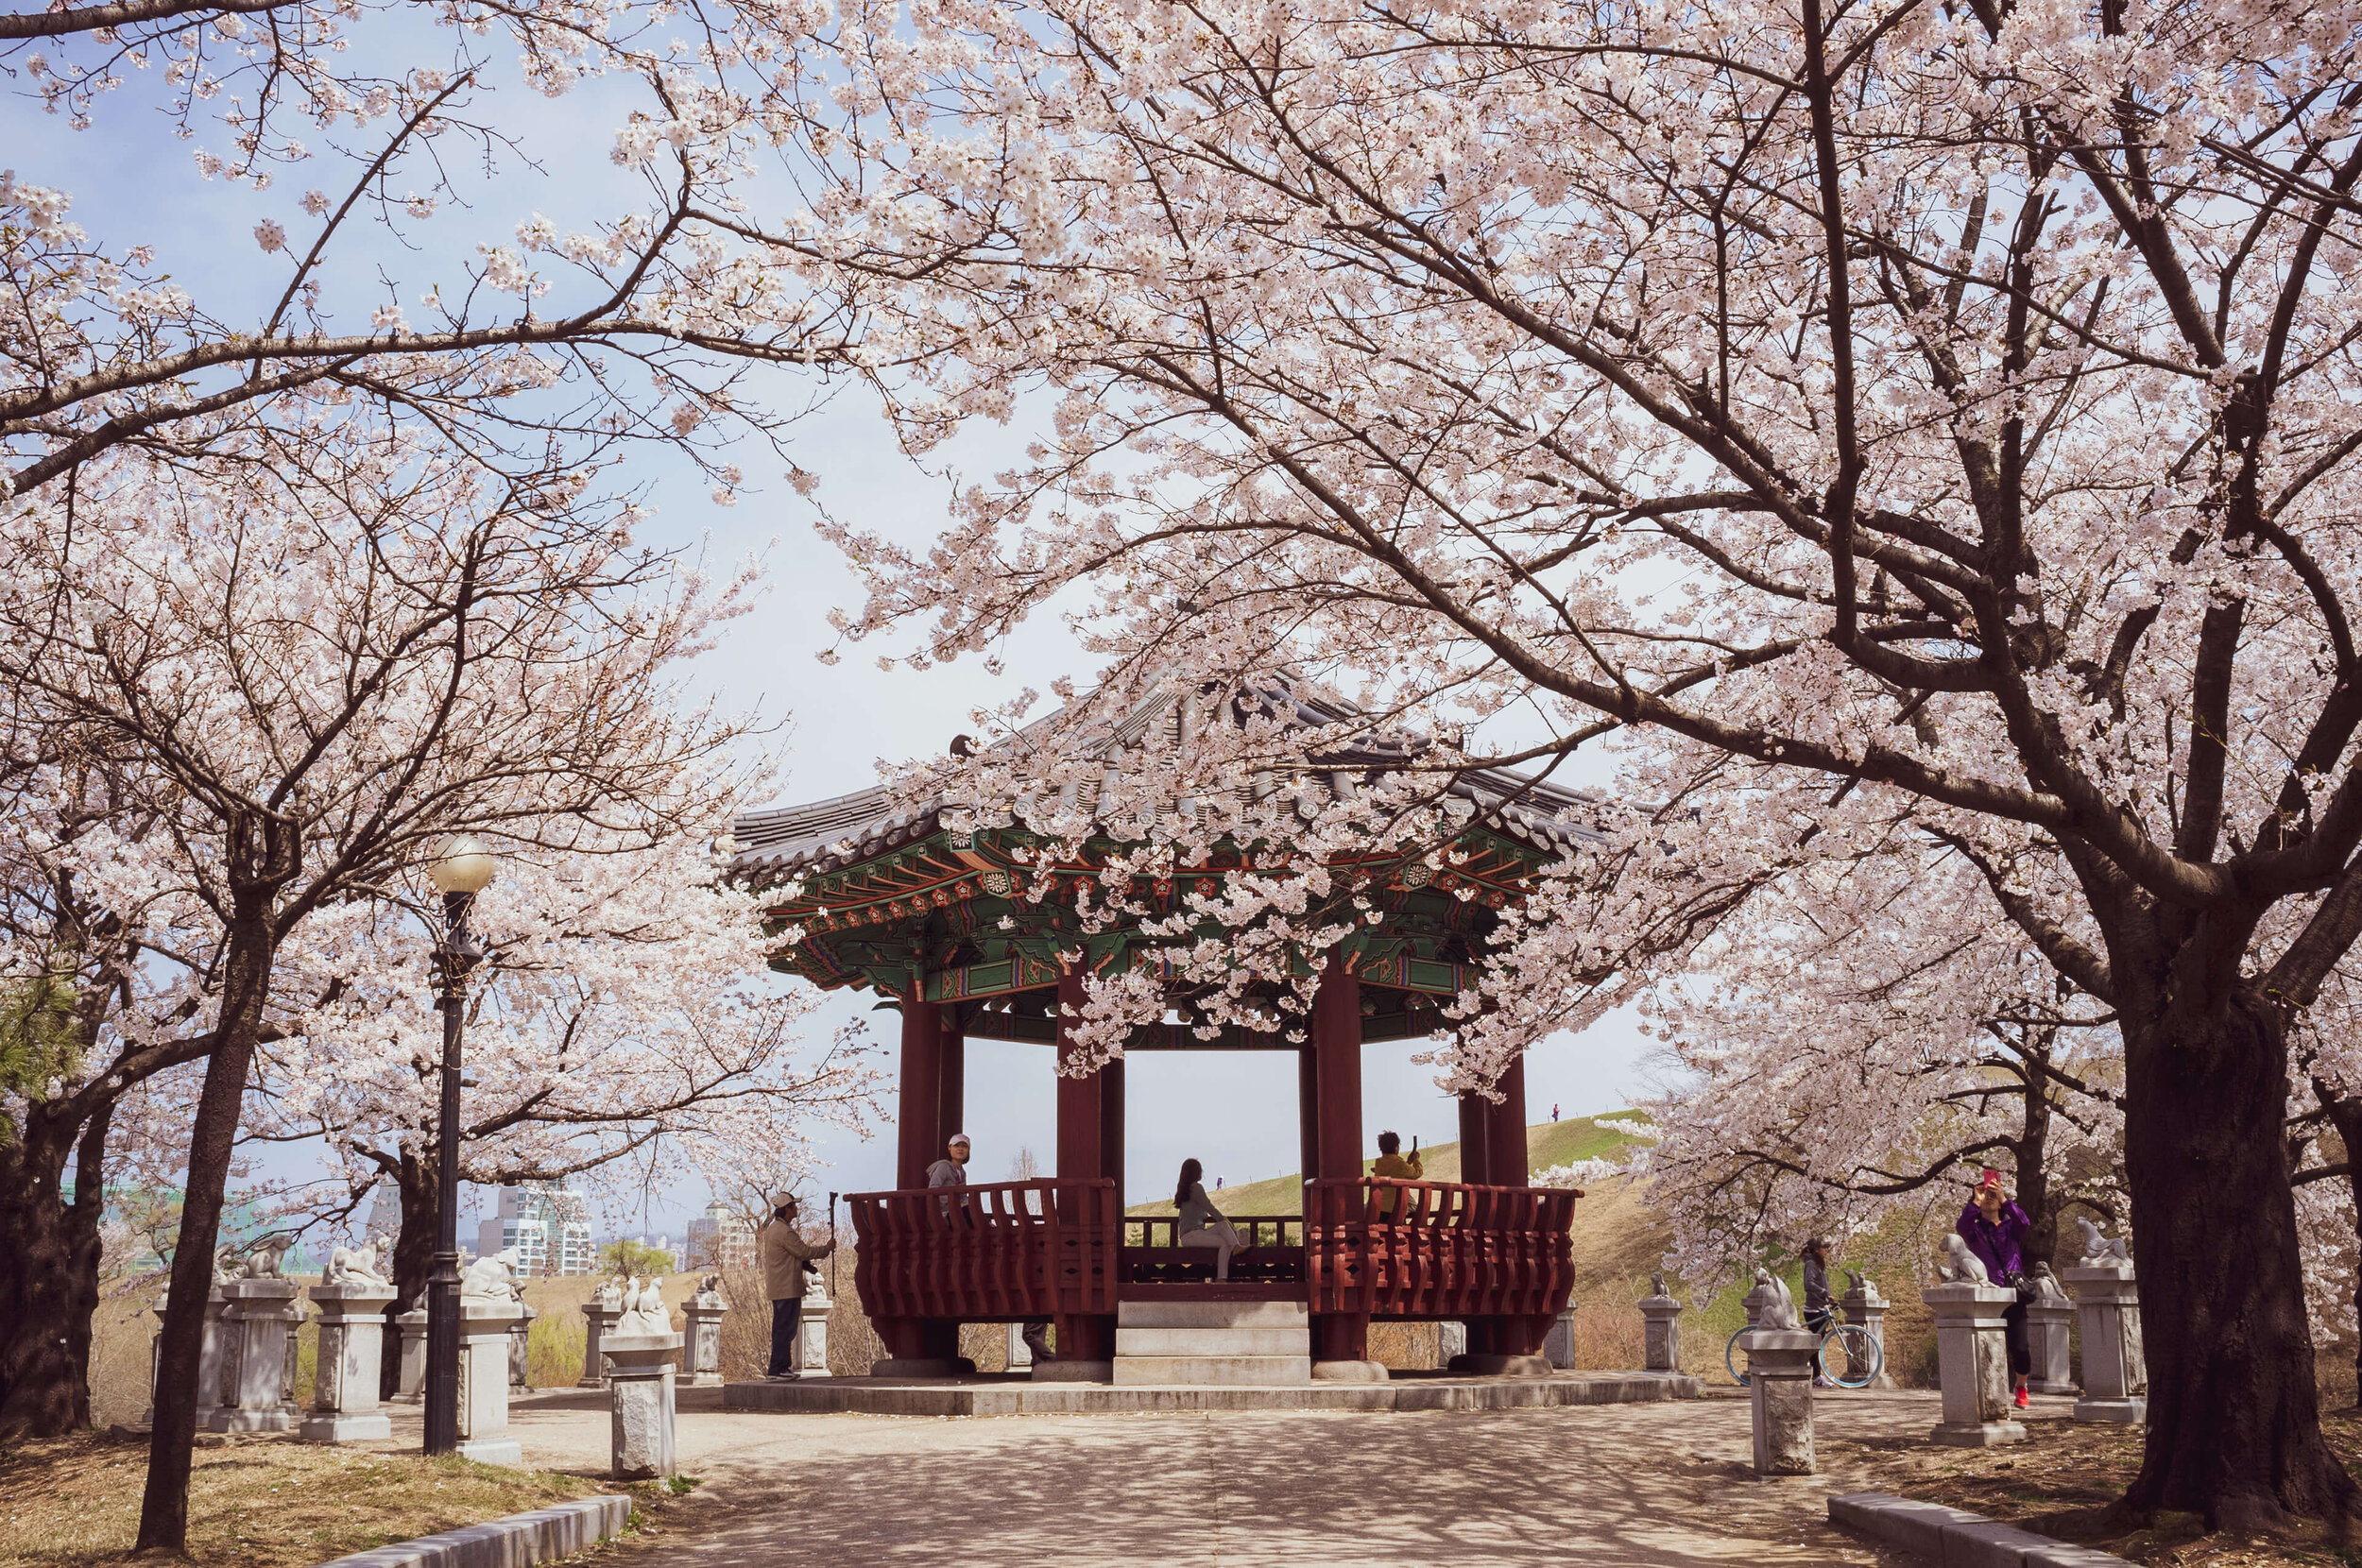 South japan. Сеул Южная Корея Сакура. Корея дворец кёнбоккун цветение Сакуры. Королевский дворец Сеул Сакура. Цветение Сакуры в Южной Корее.